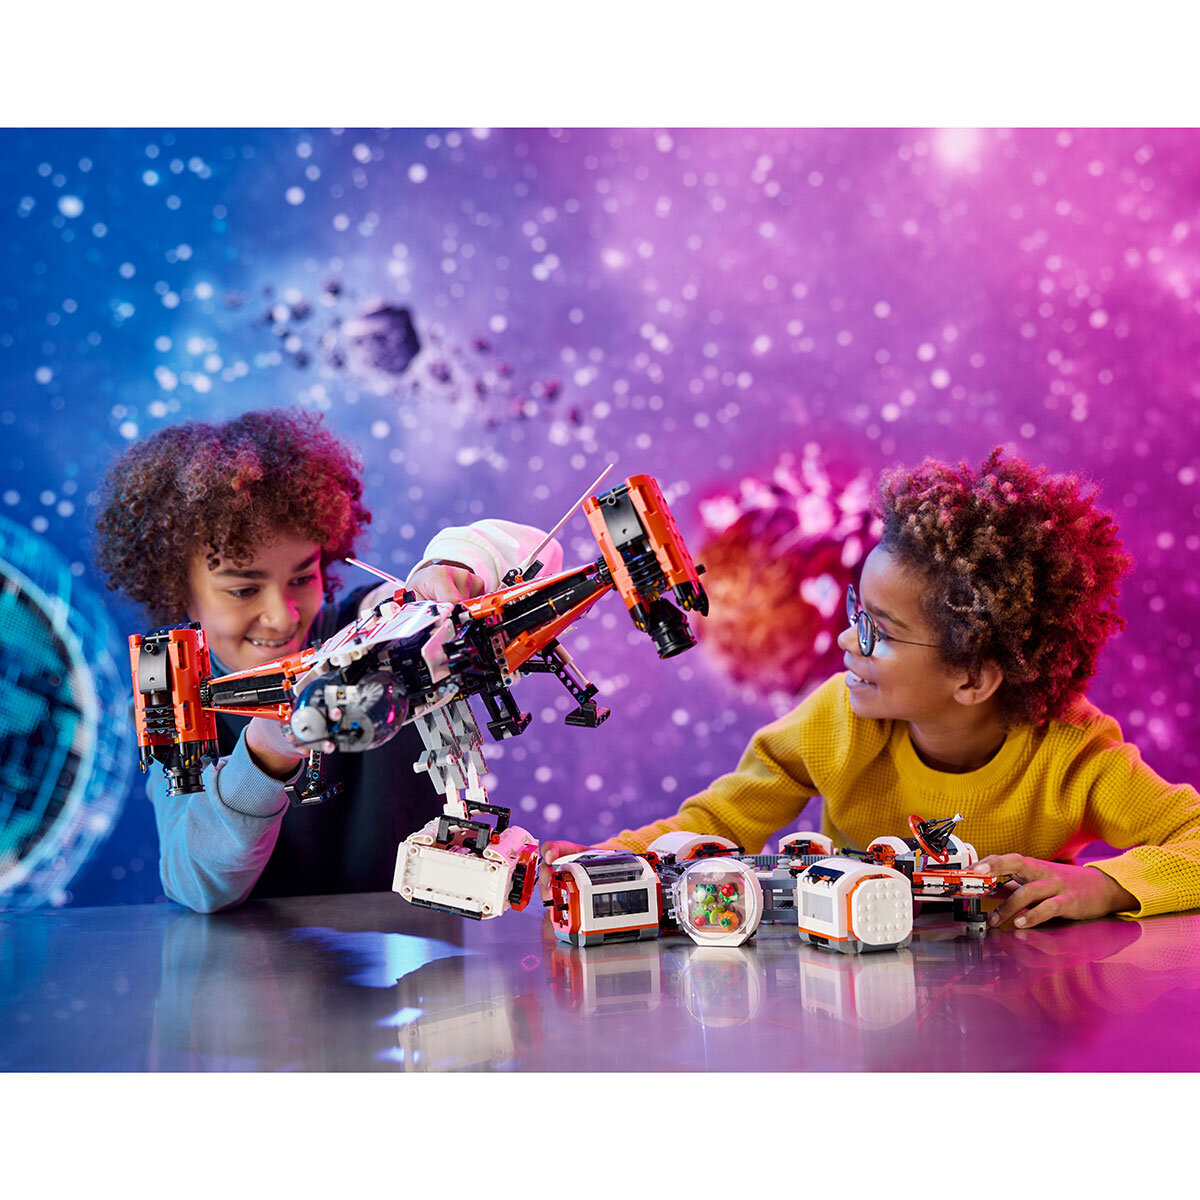 Buy LEGO City Modular Space Station Lifestyle Image at Costco.co.uk